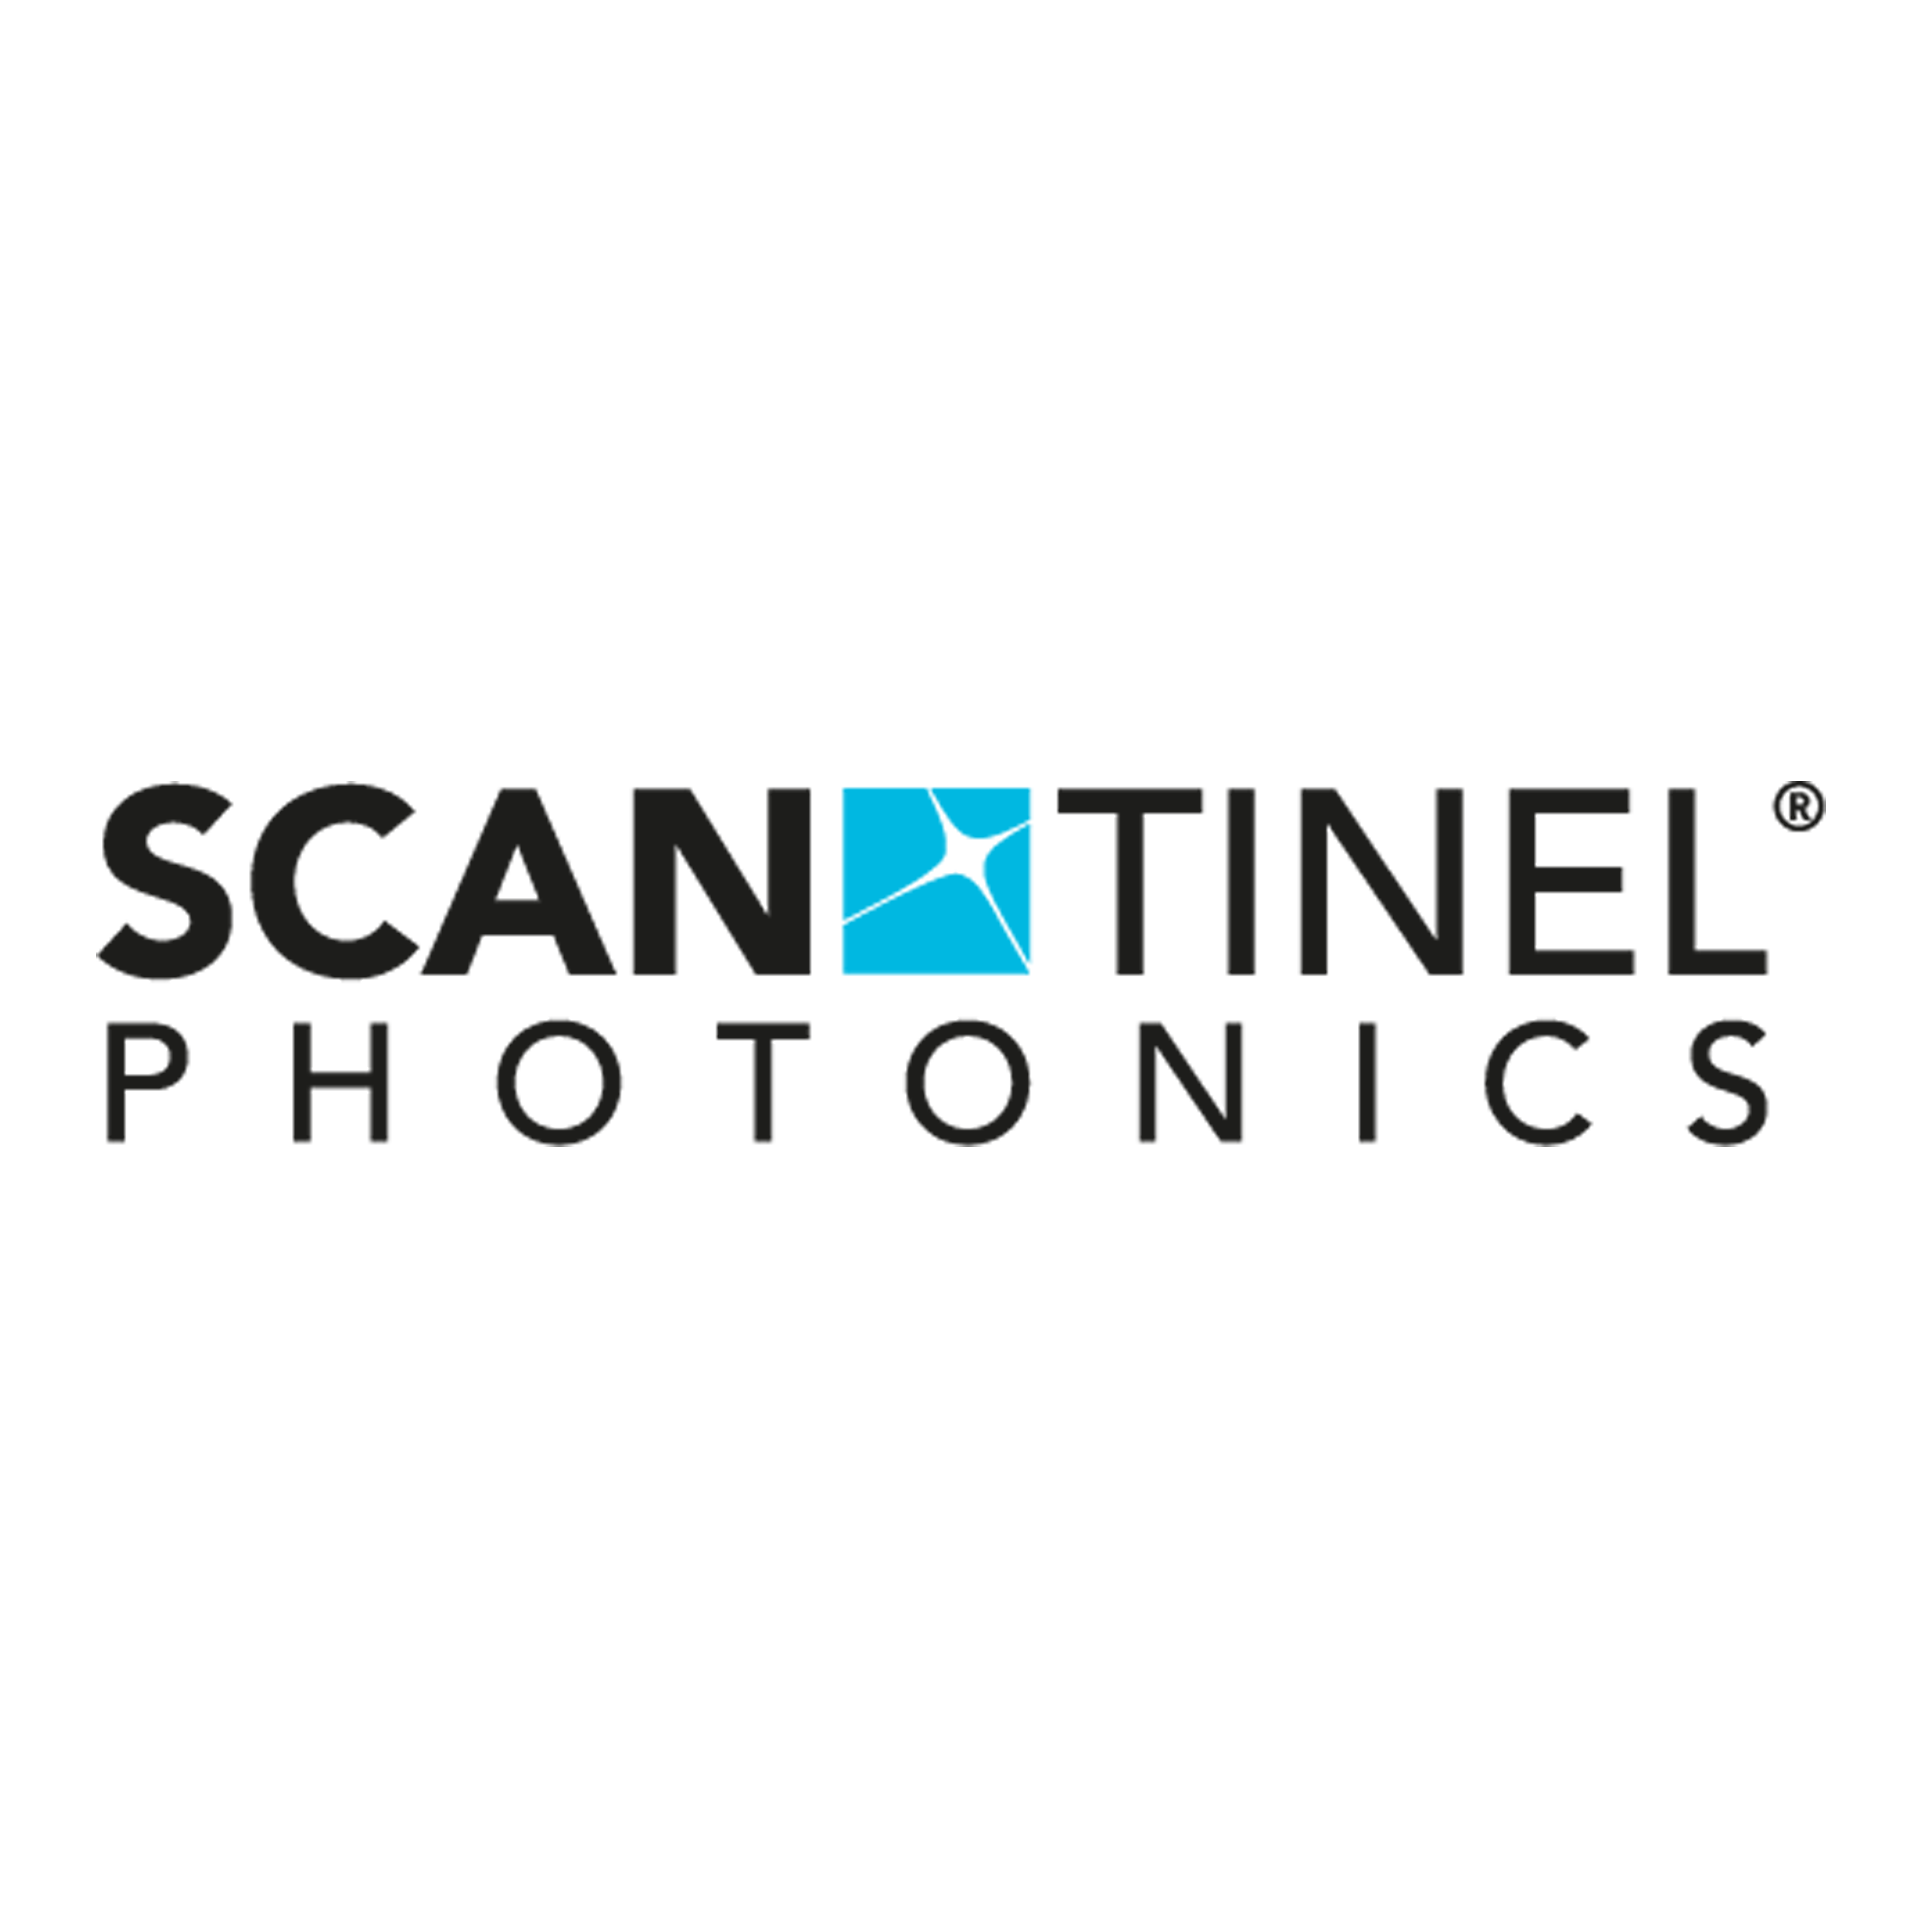 Scantinel Photonics